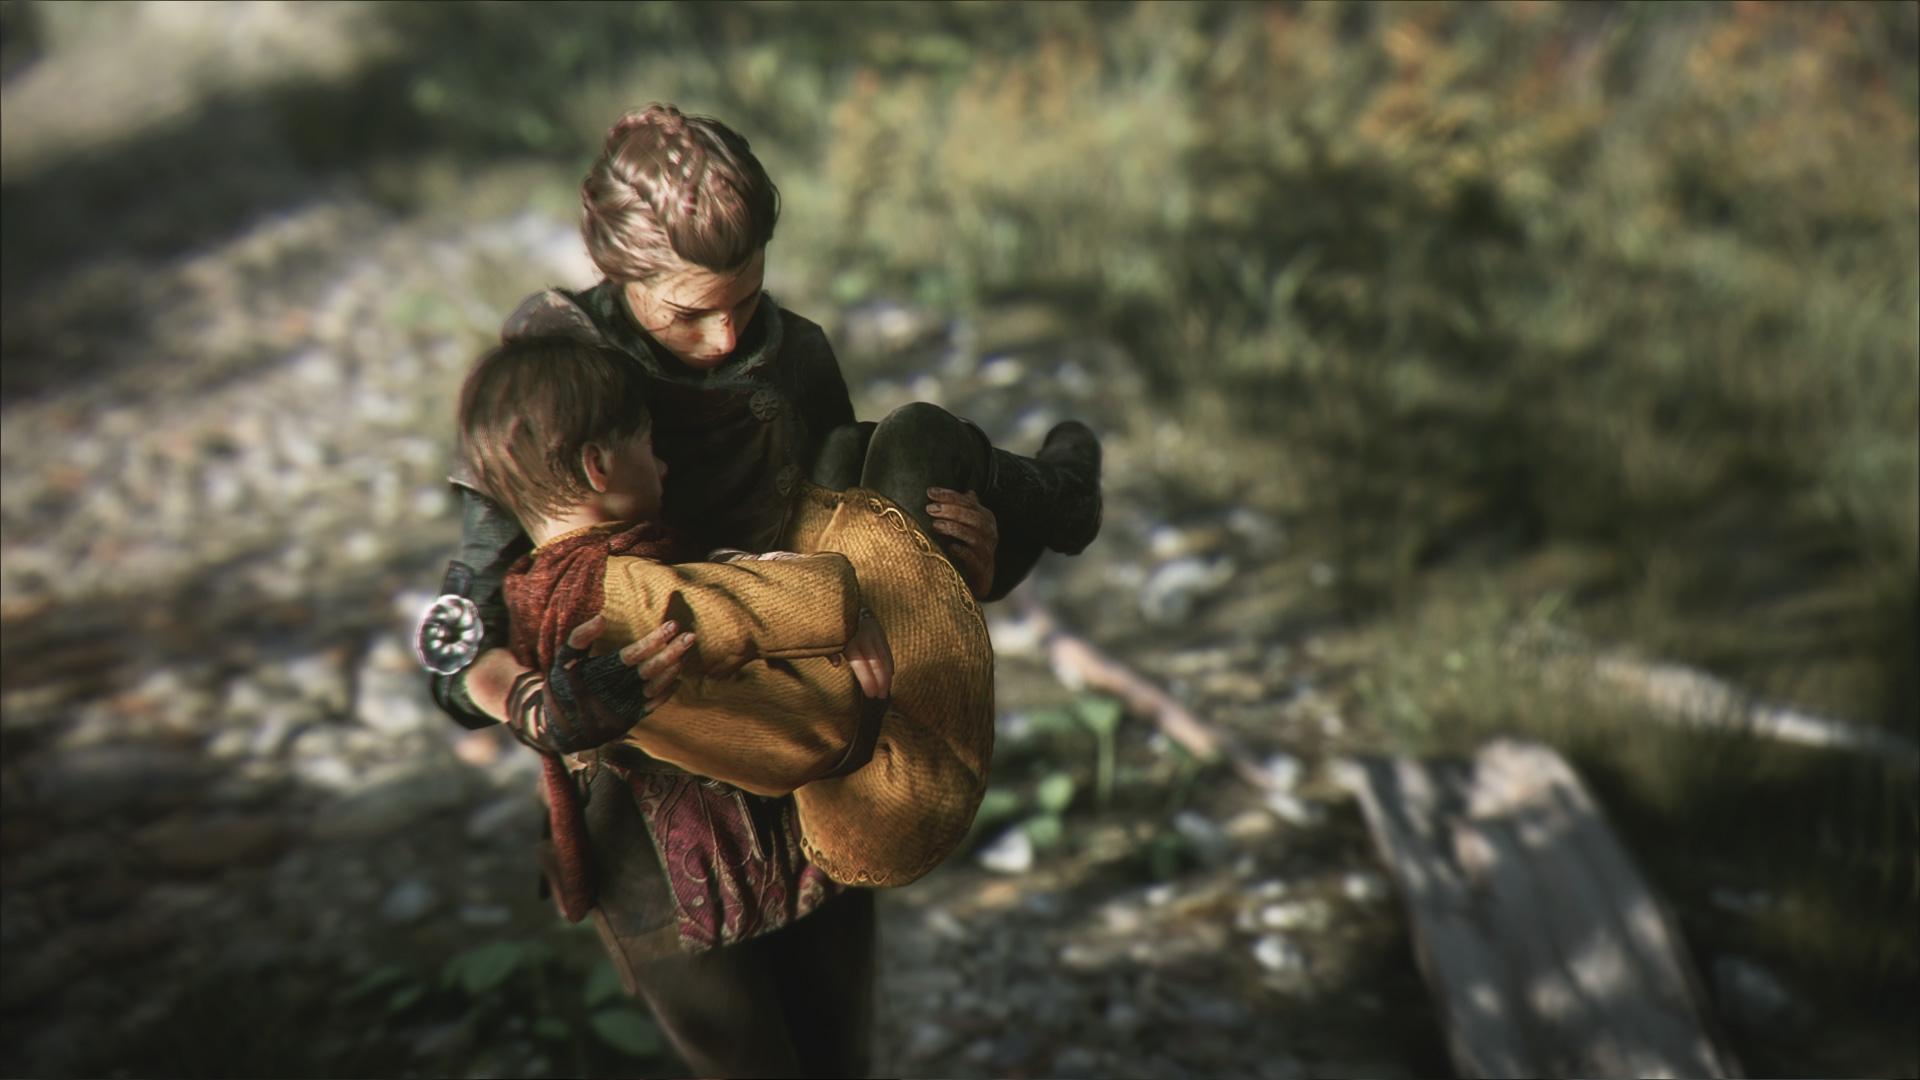 Screenshot №3 from game A Plague Tale: Innocence